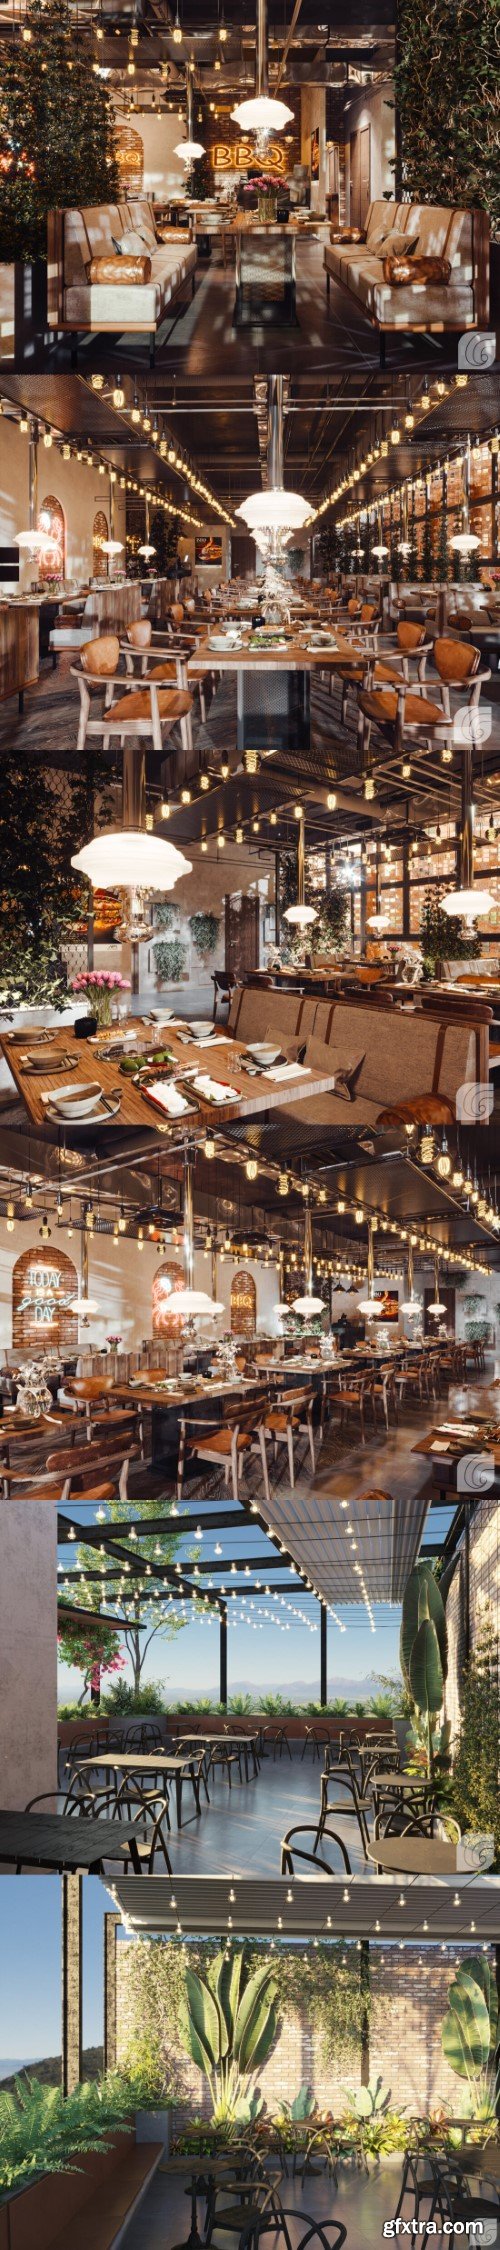 Interior Restaurant Scene By Le Dang Thuan